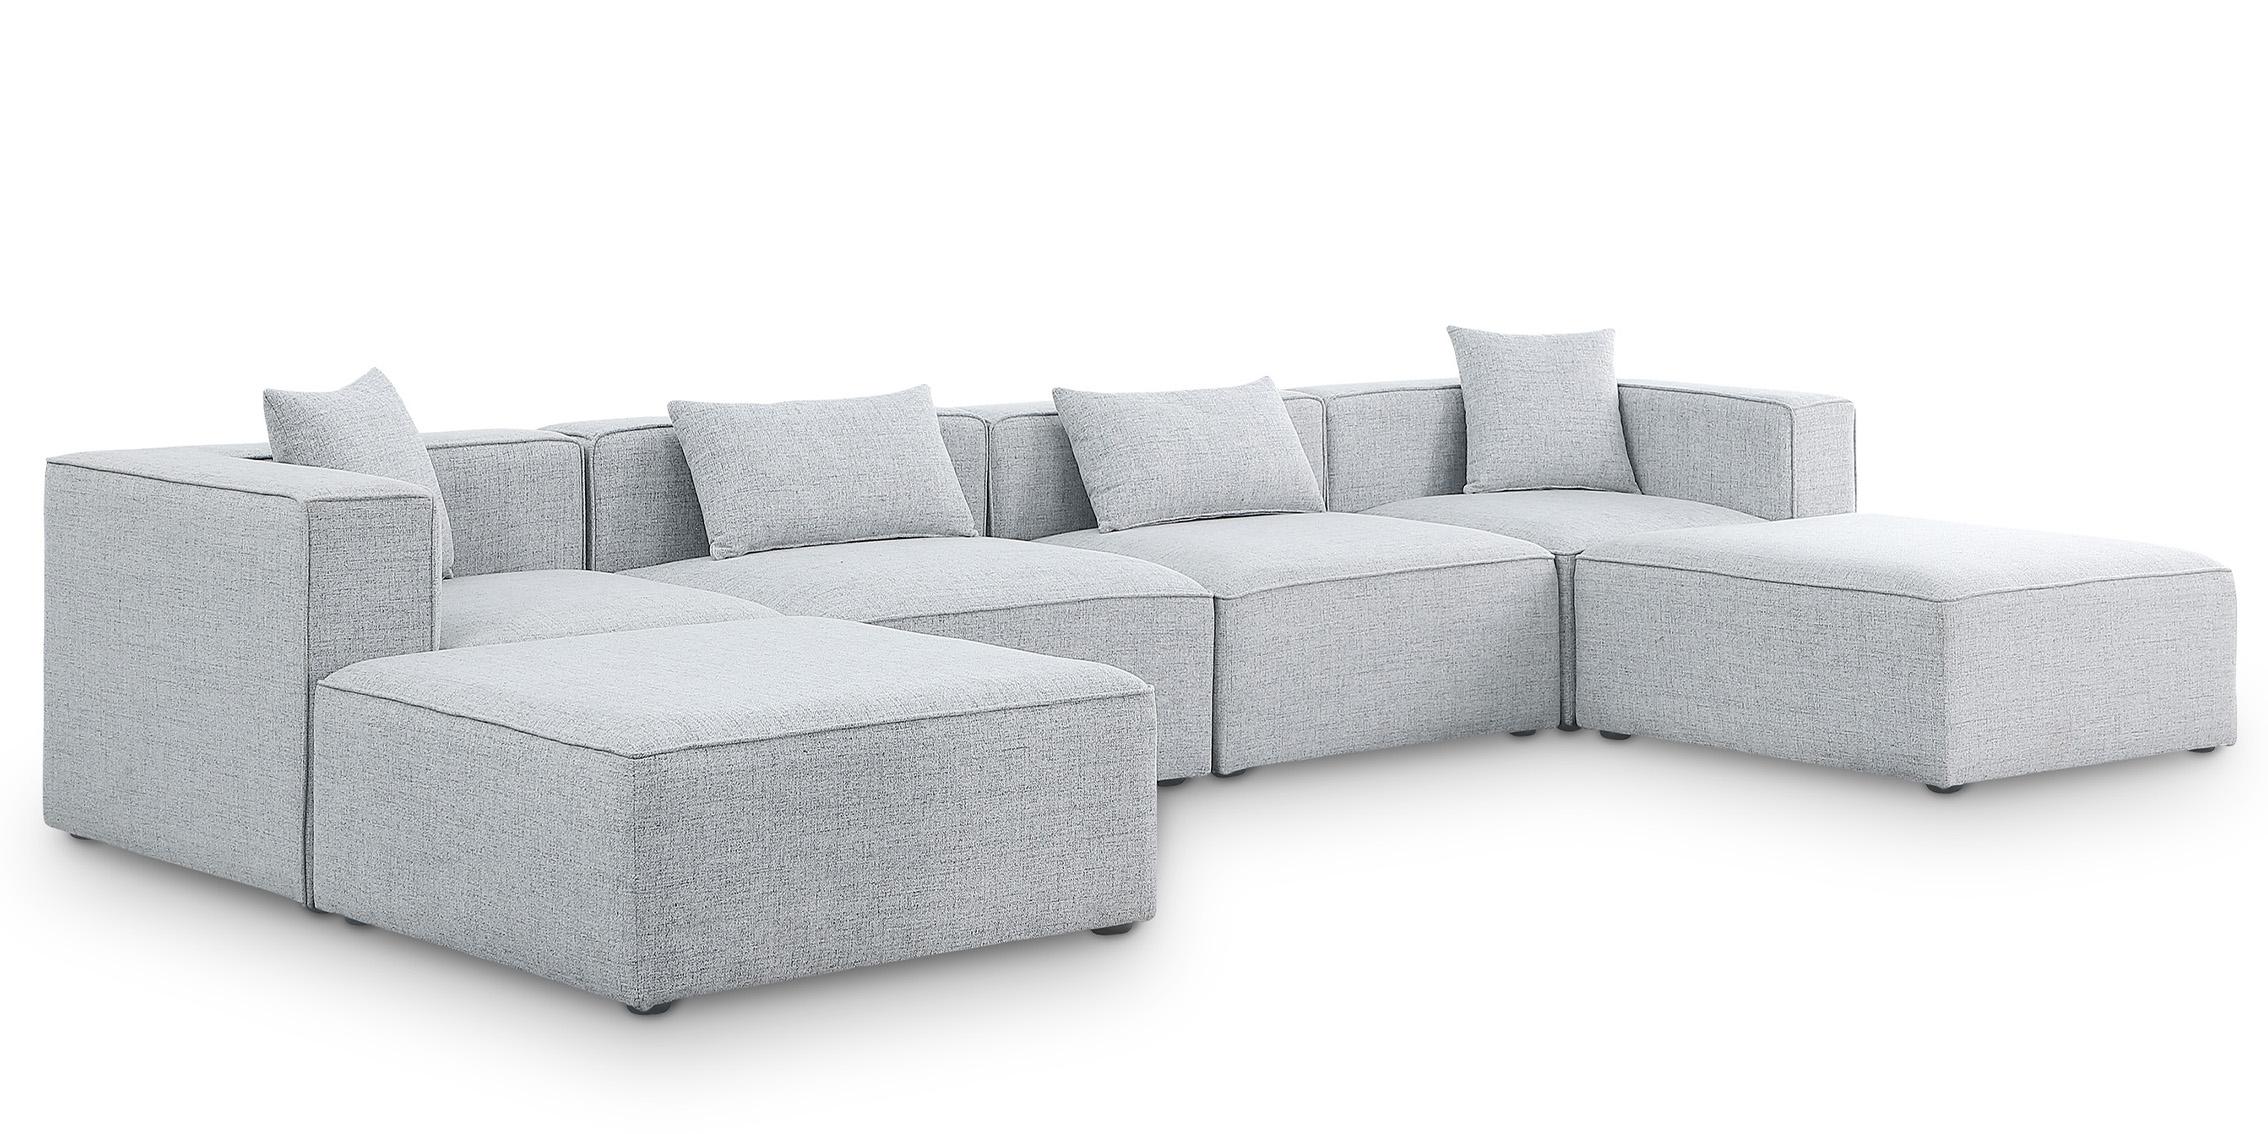 Contemporary, Modern Modular Sectional Sofa CUBE 630Grey-Sec6B 630Grey-Sec6B in Gray Linen